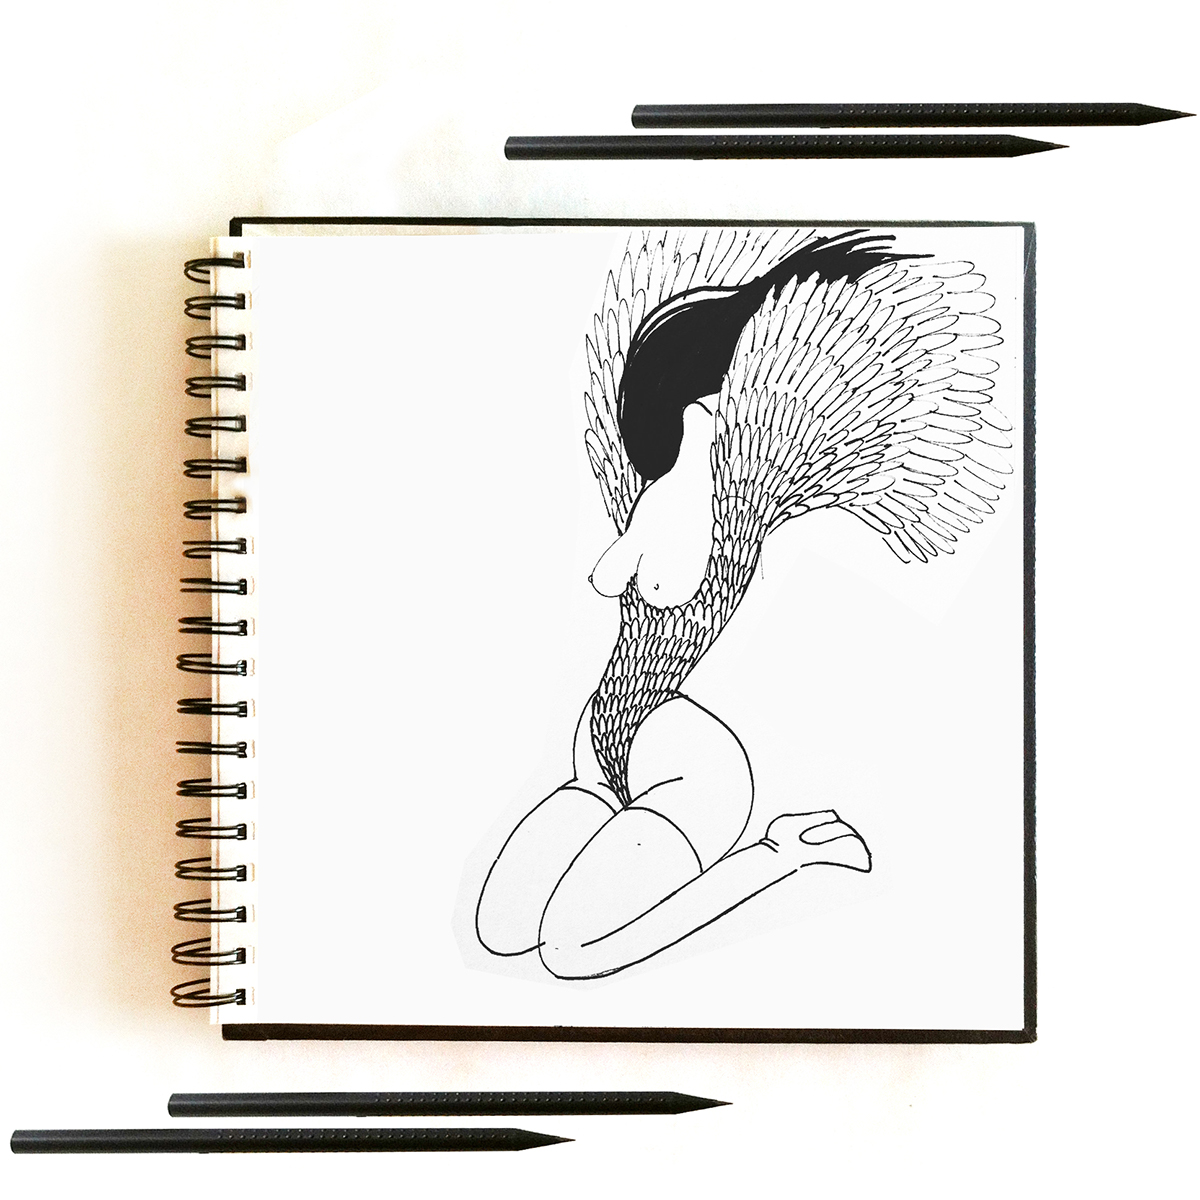 personal project Proyecto personal sketchbook dibujo lineart dibujoalinea Figurahumana arte artistico